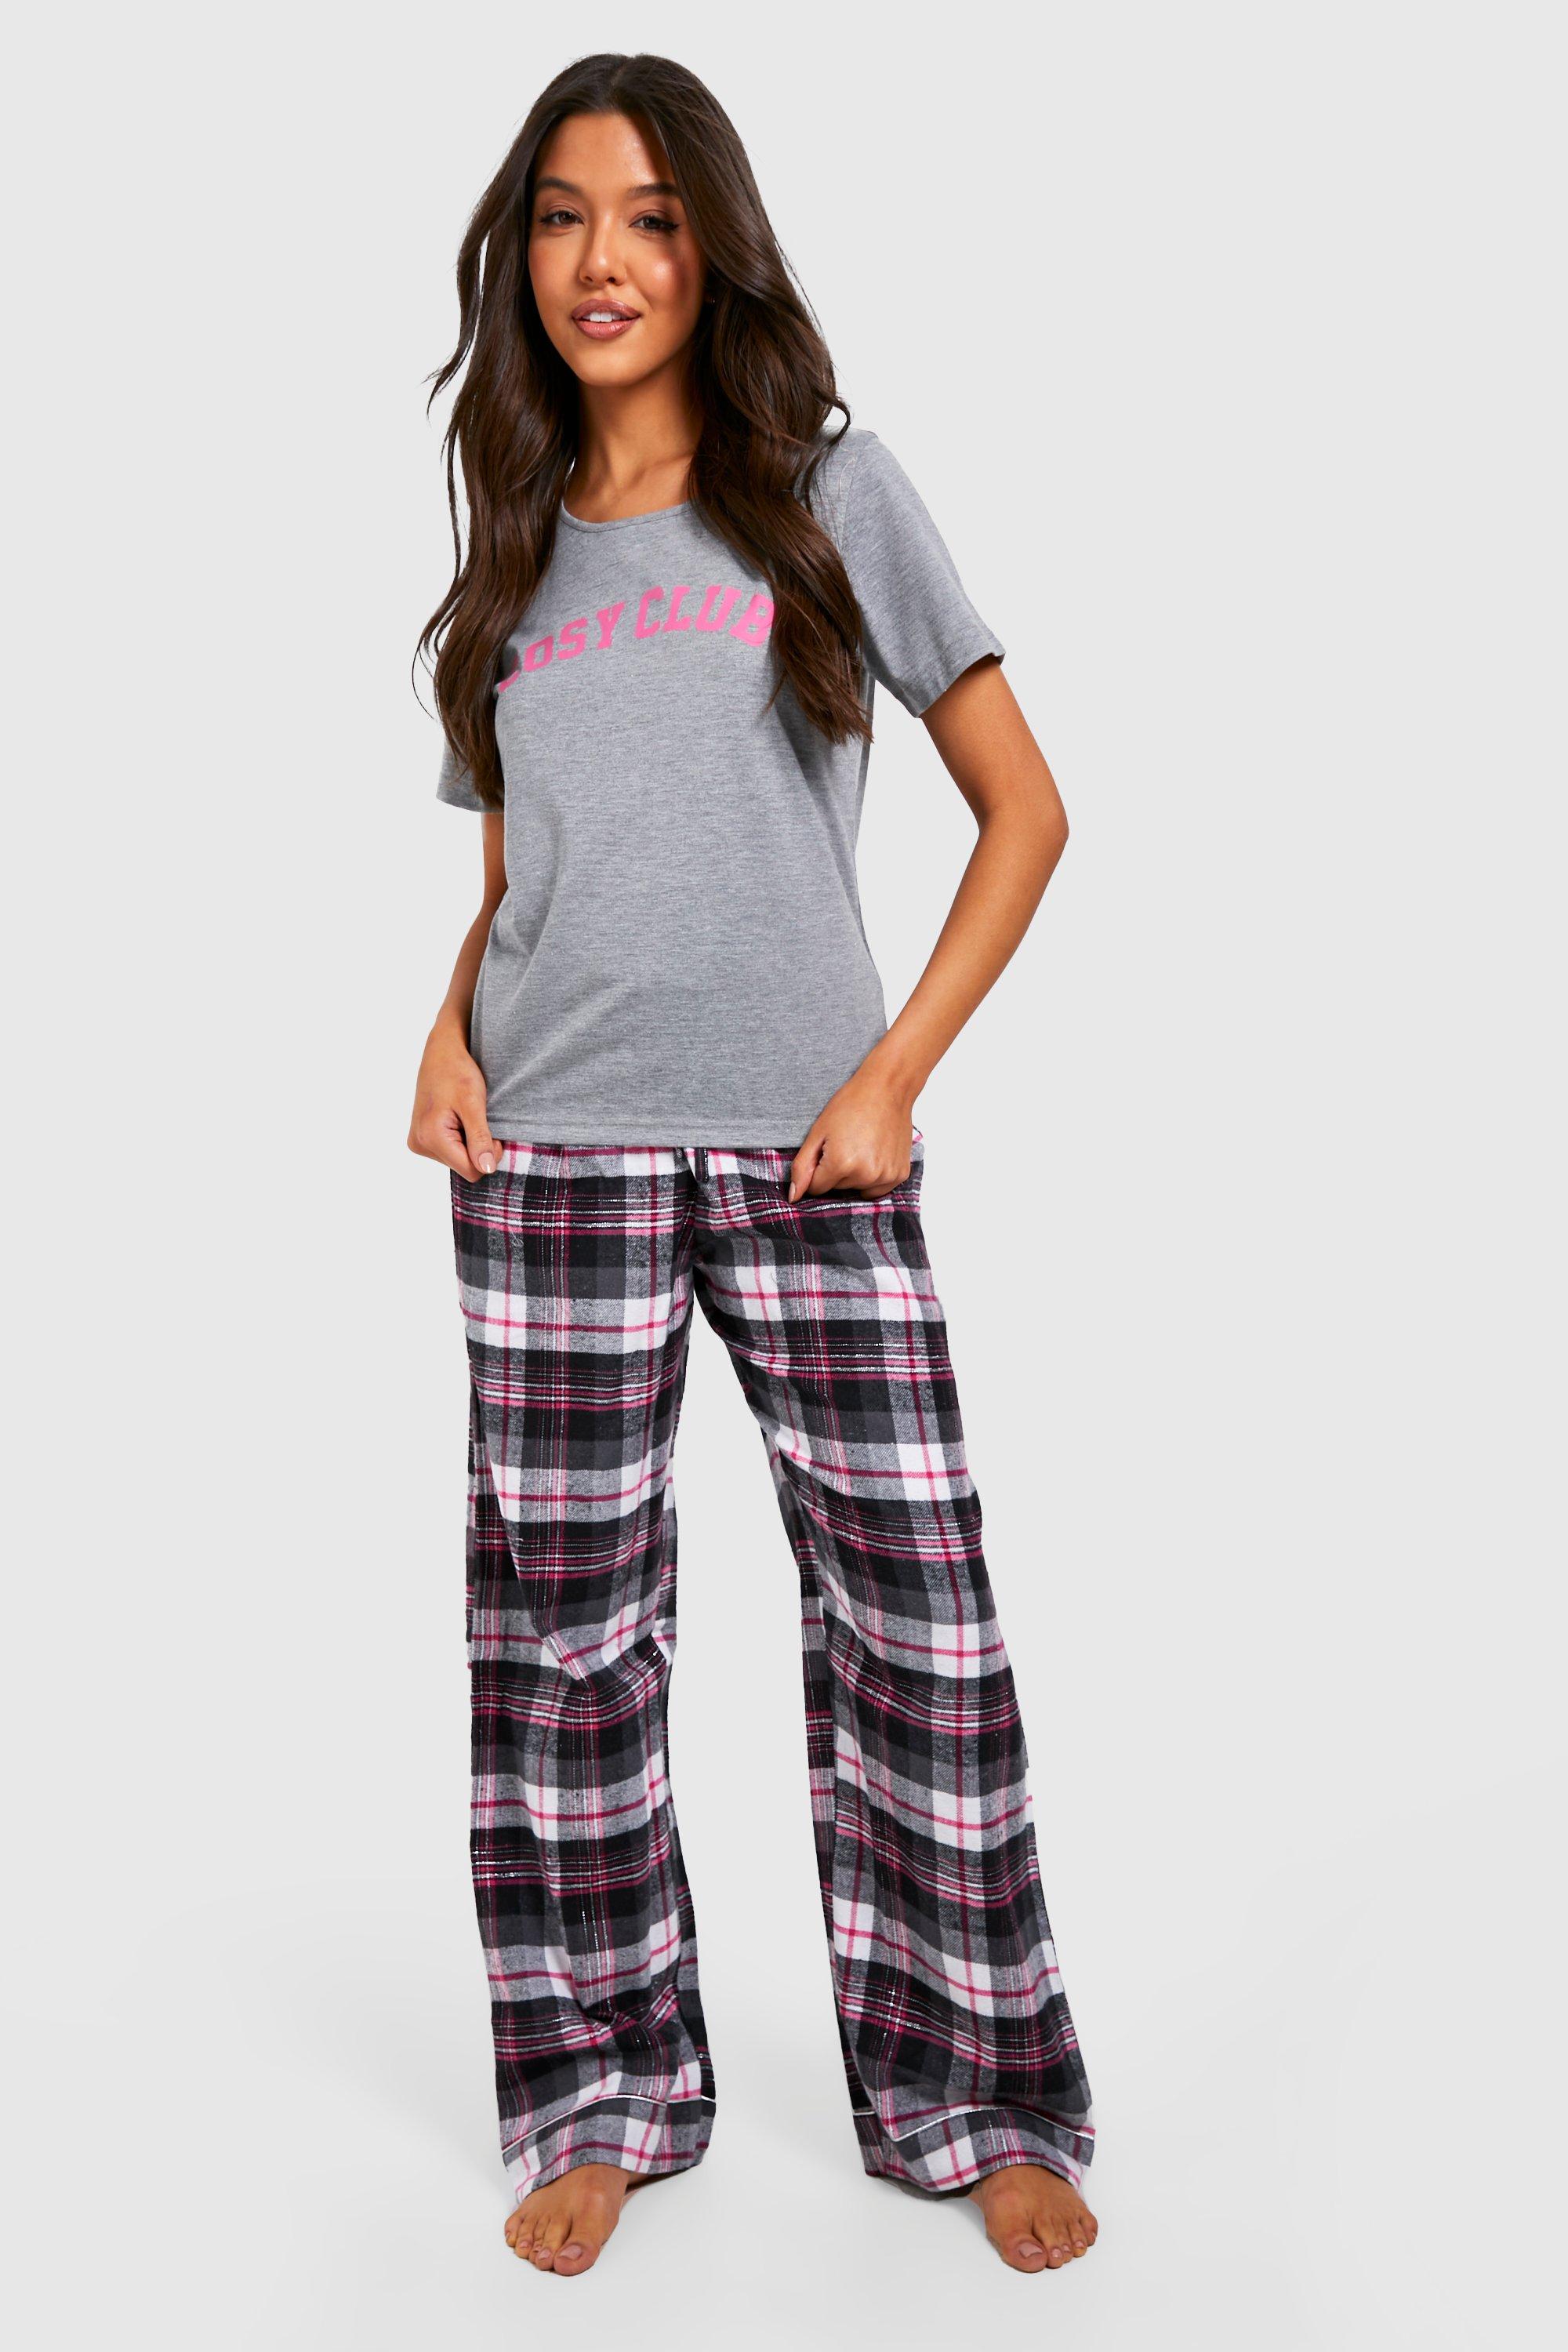 https://media.boohoo.com/i/boohoo/gzz30019_grey_xl_2/female-grey-cosy-club-pajama-t-shirt-&-flannel-pants-set